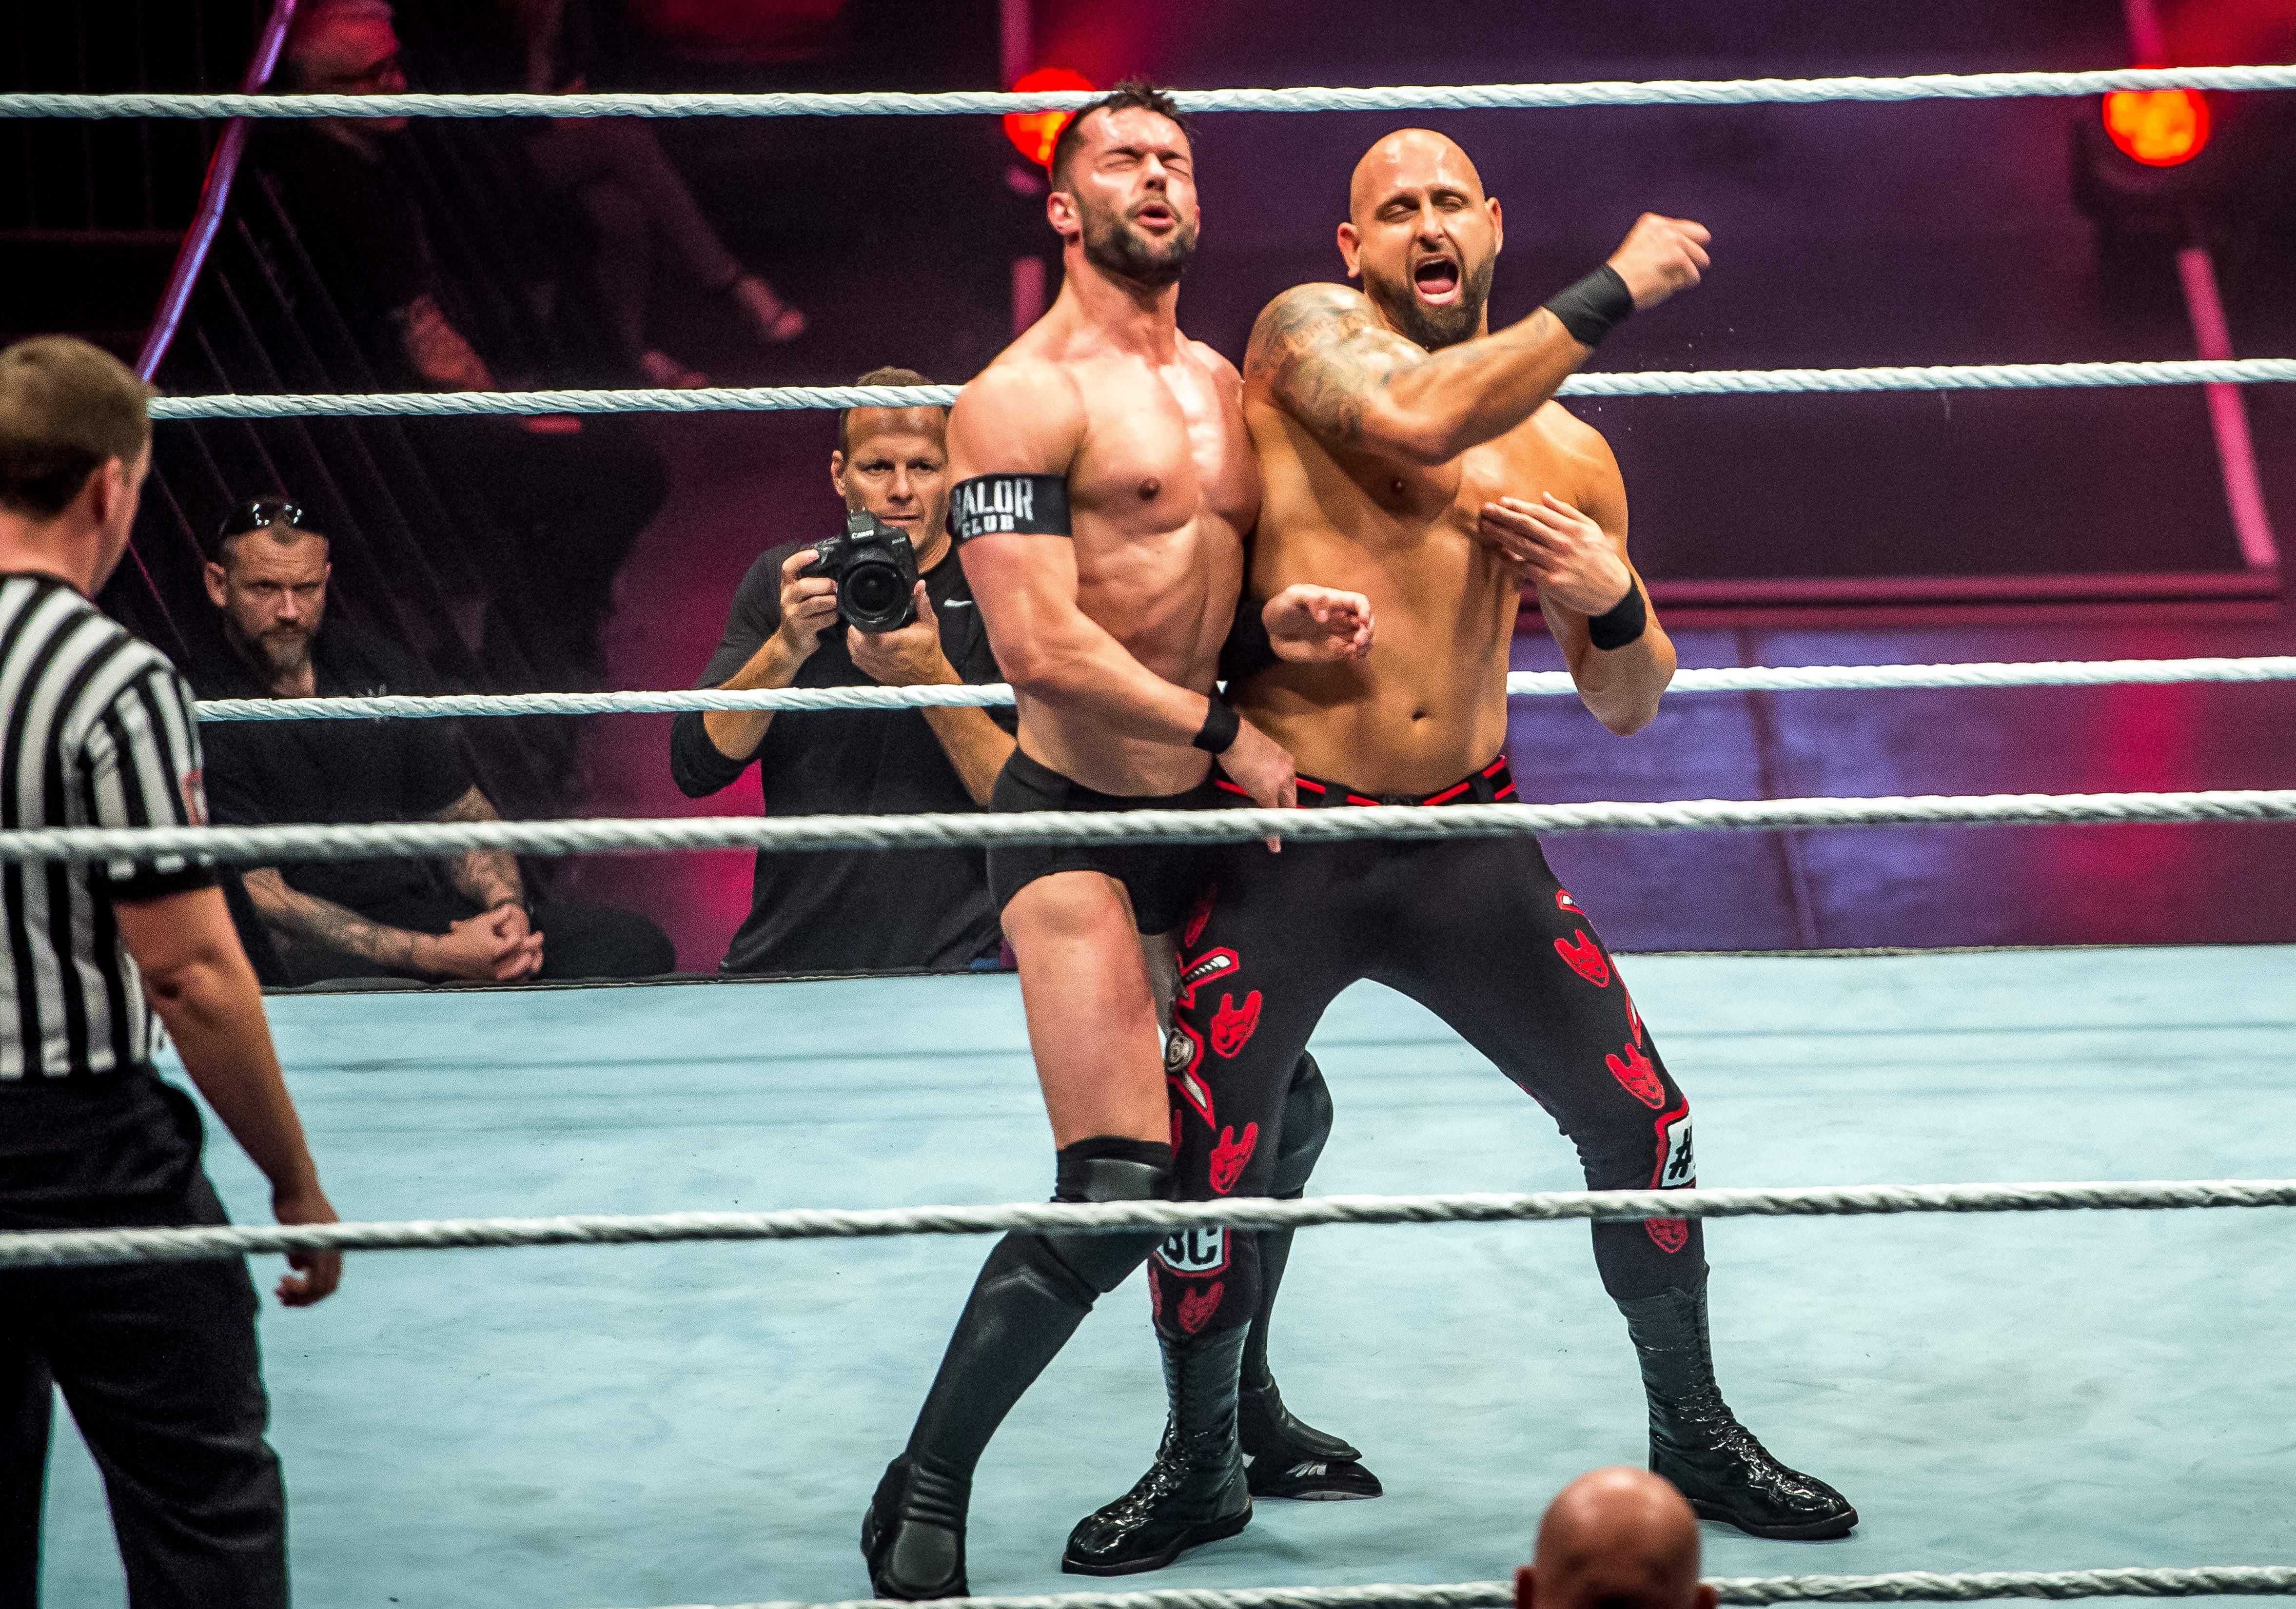 WWE Smackdown London #22